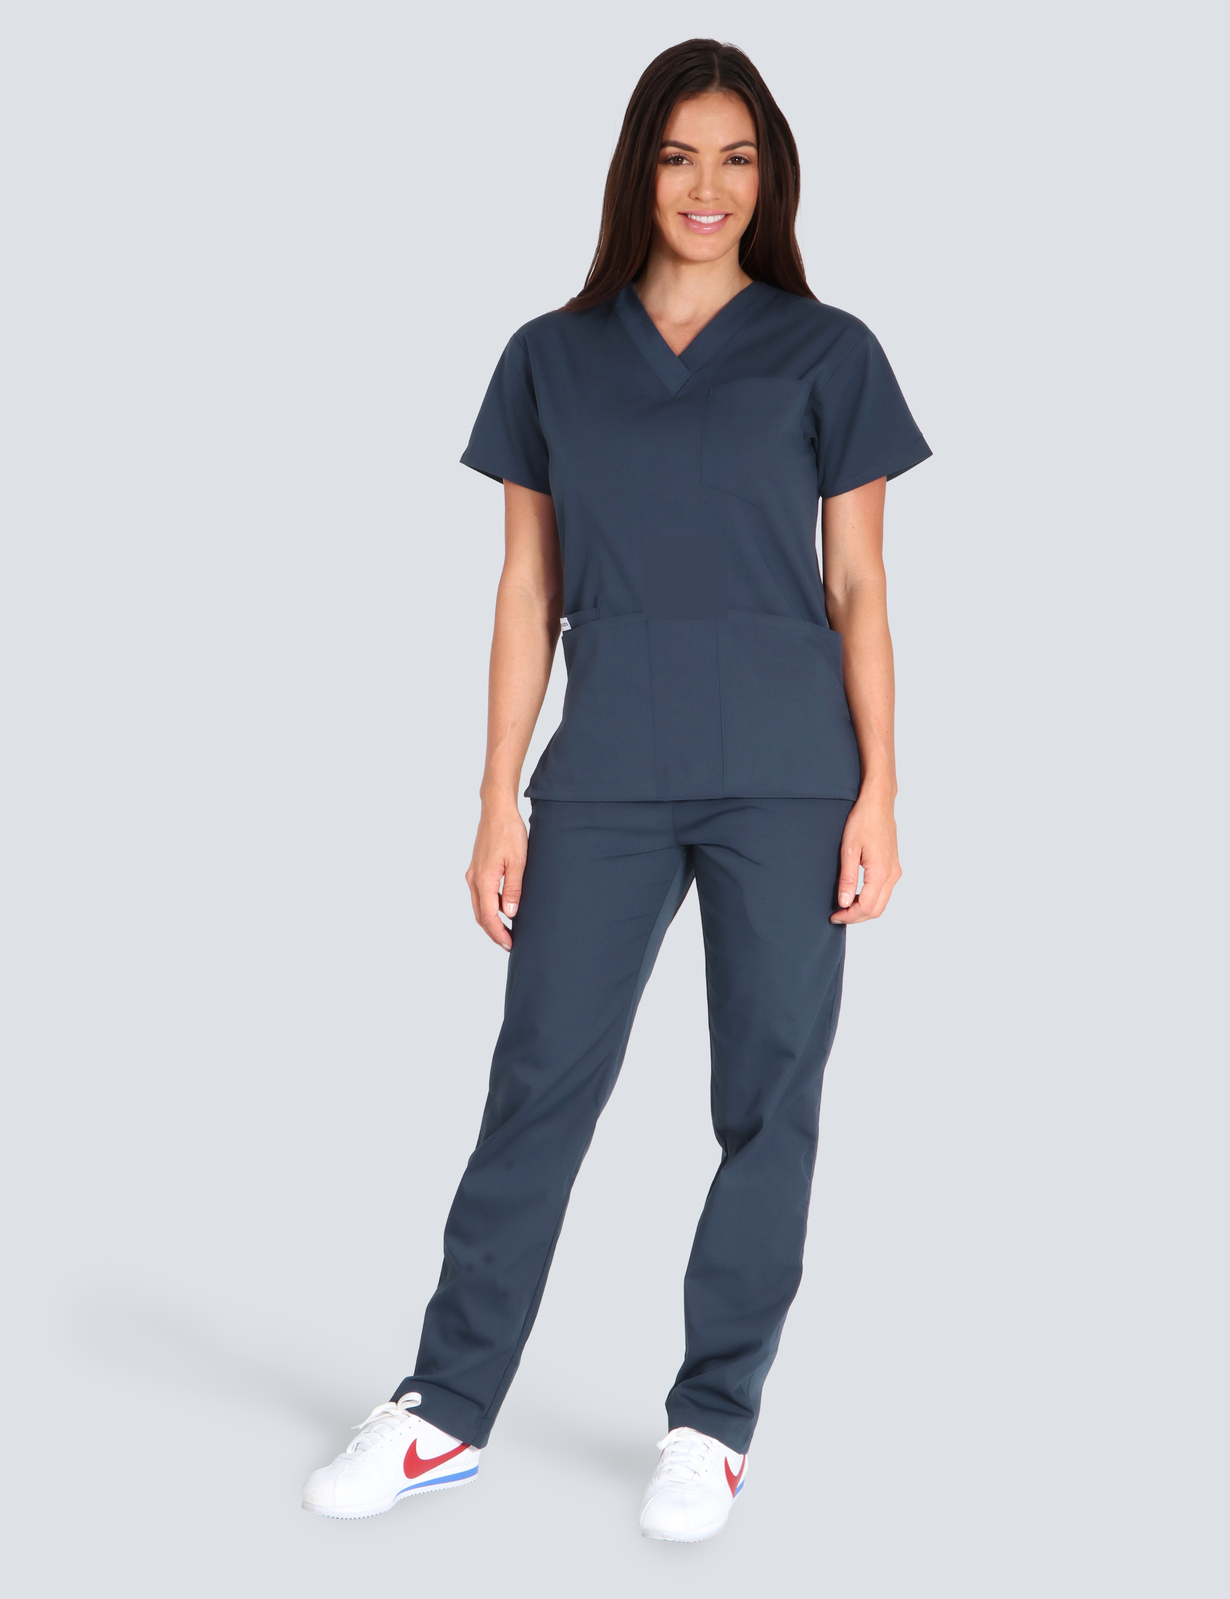 Regional Queensland Clinical Nurse Uniform Set Bundle (4 Pocket Top and Cargo Pants incl Logos)  